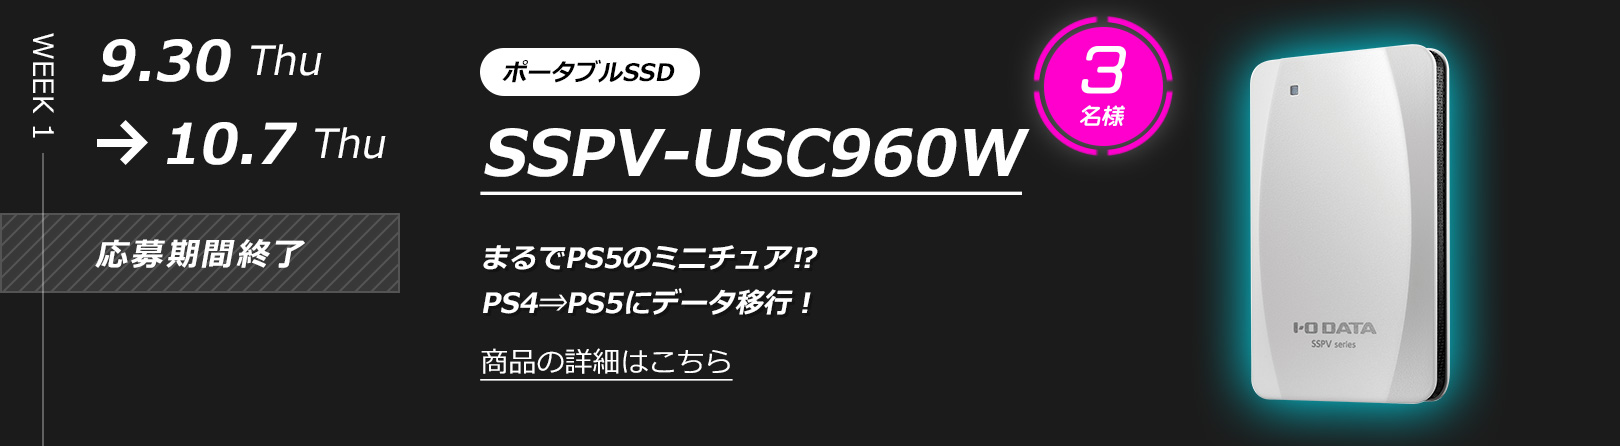 WEEK 1: ポータブルSSD SSPV-USC960W